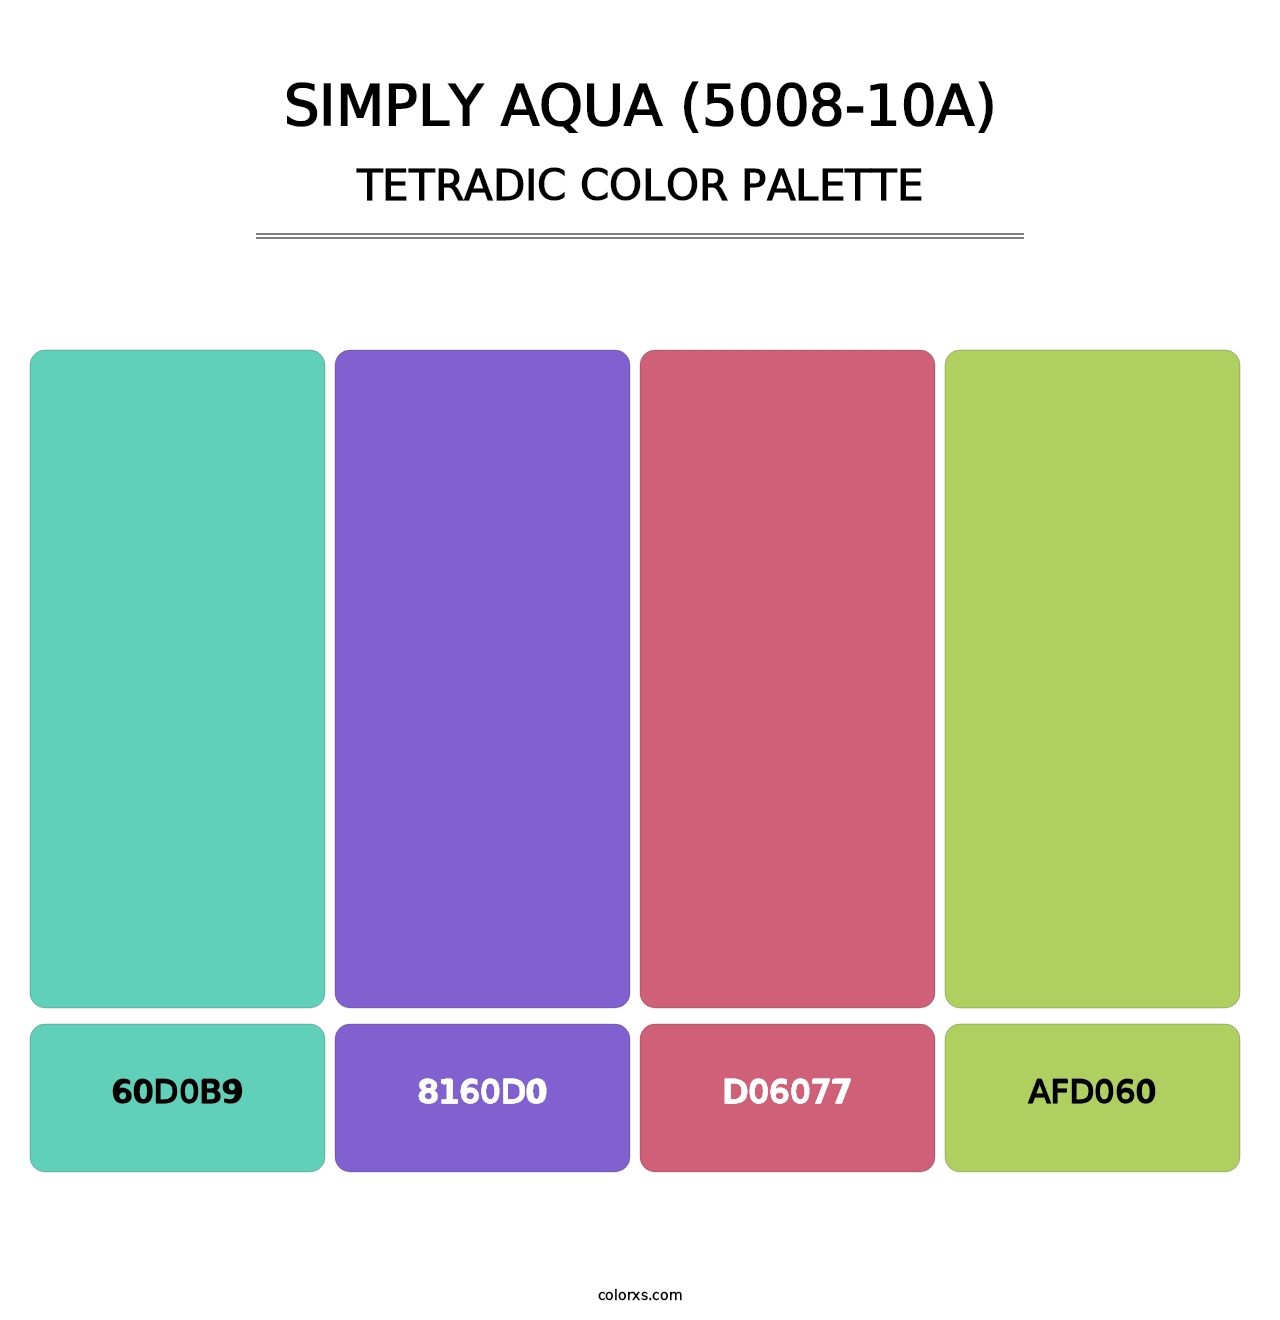 Simply Aqua (5008-10A) - Tetradic Color Palette